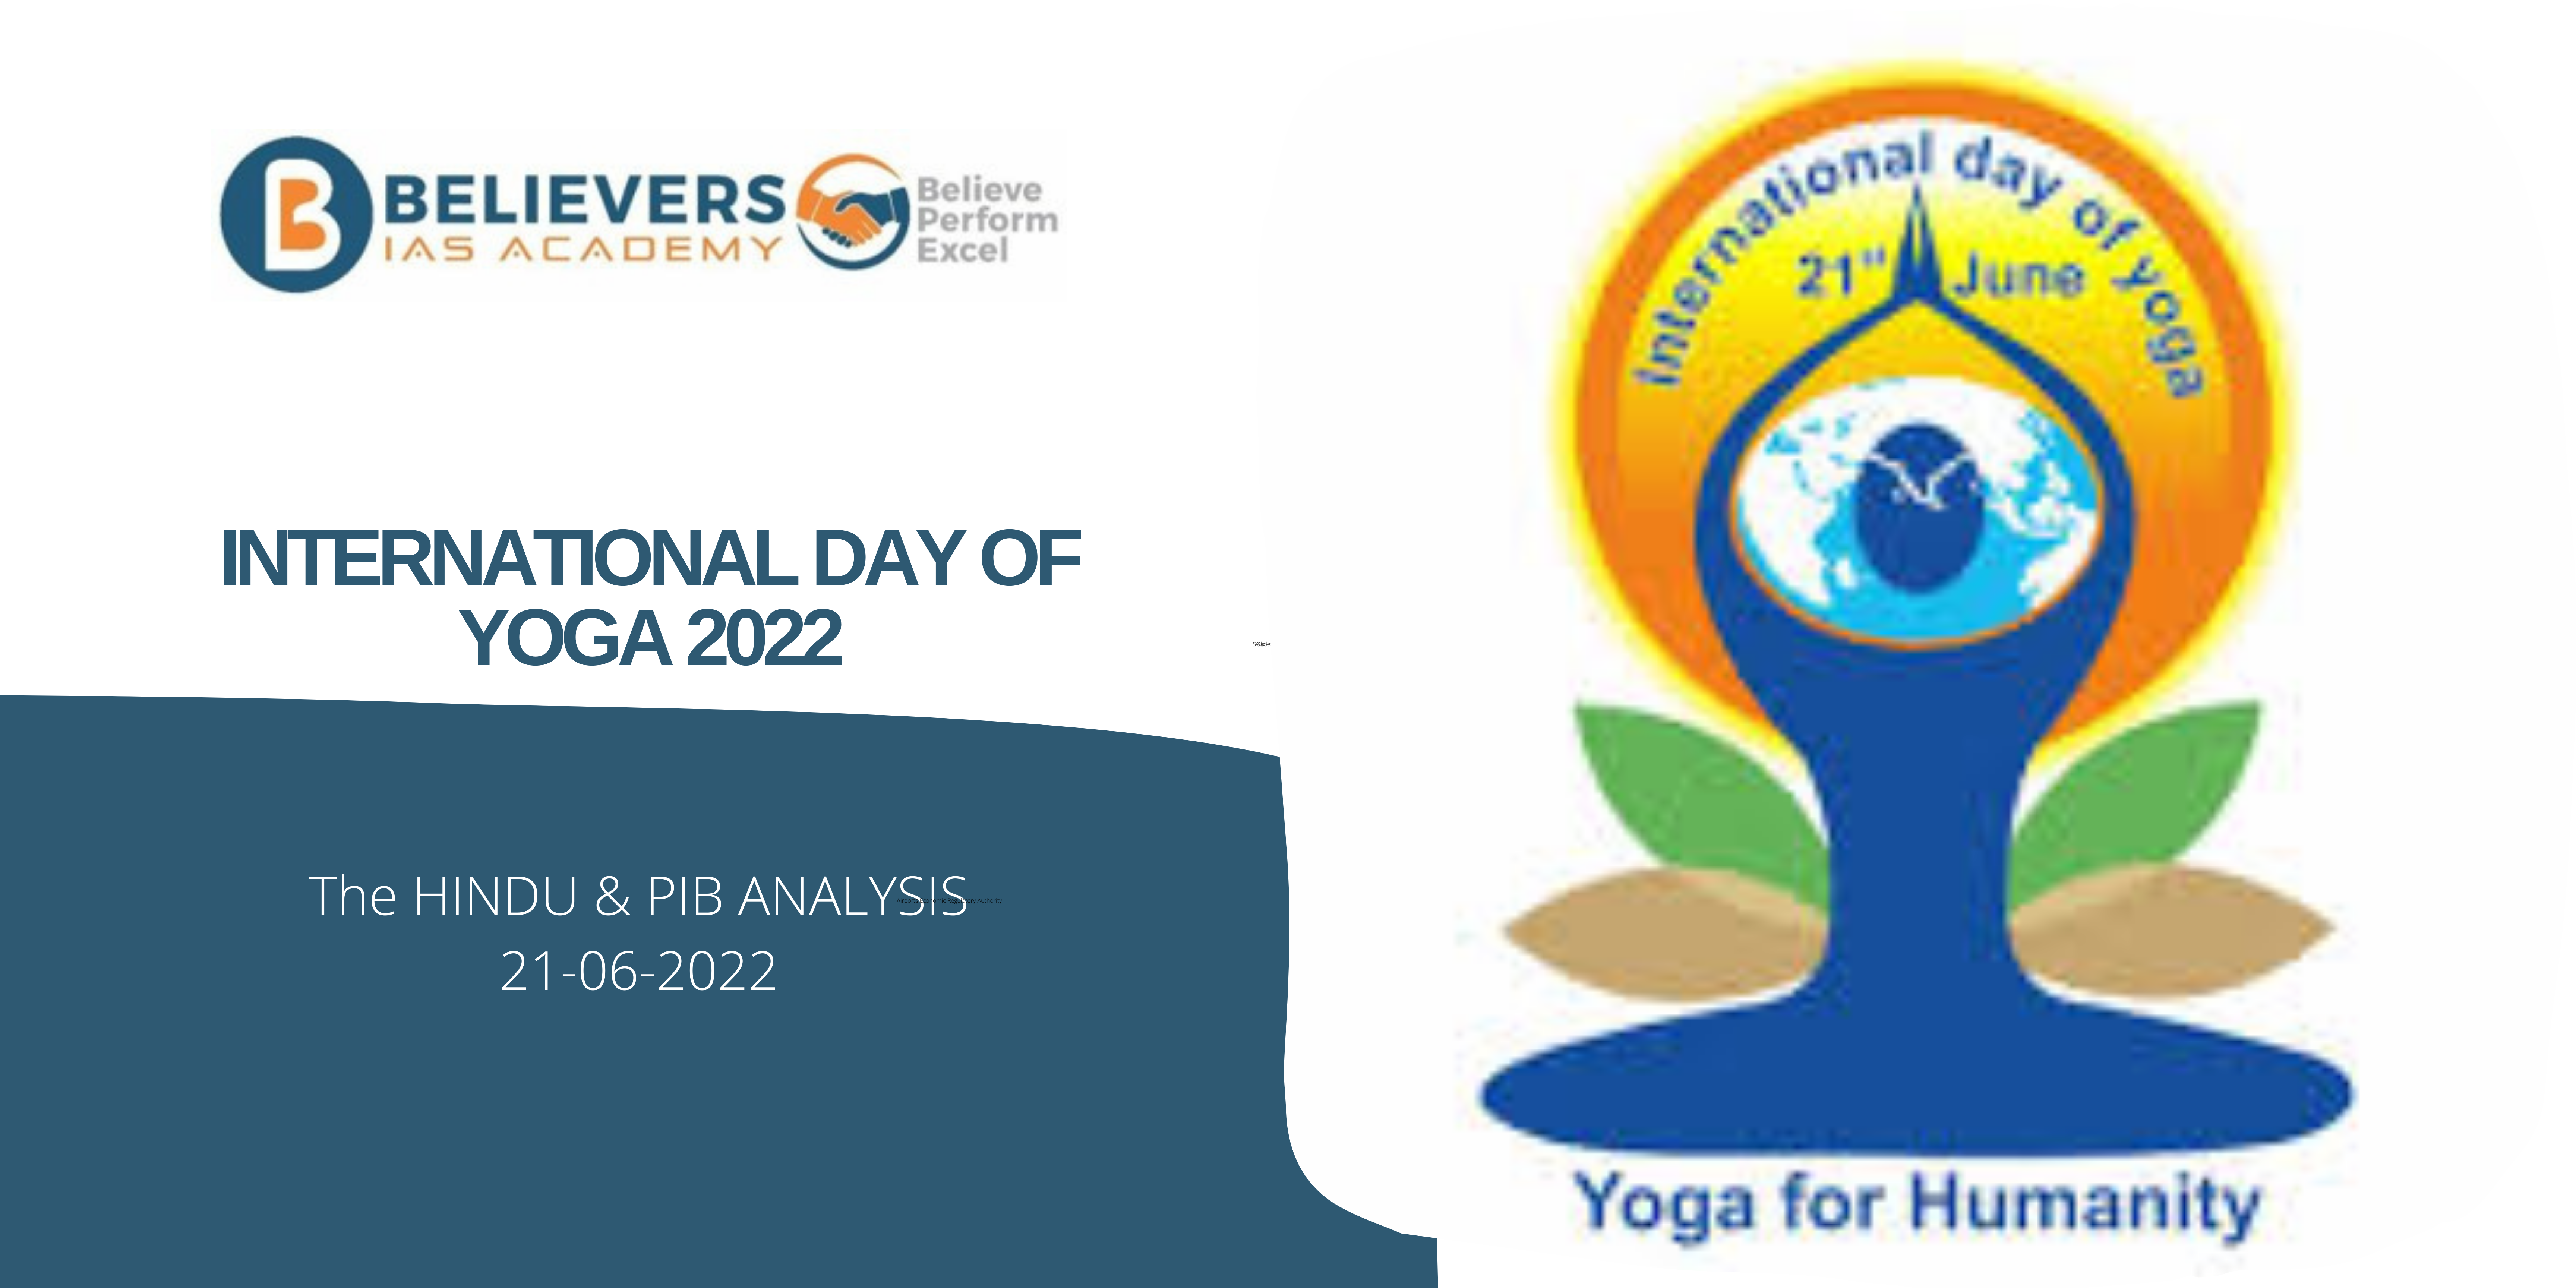 UPSC Current affairs - International Day of Yoga 2022